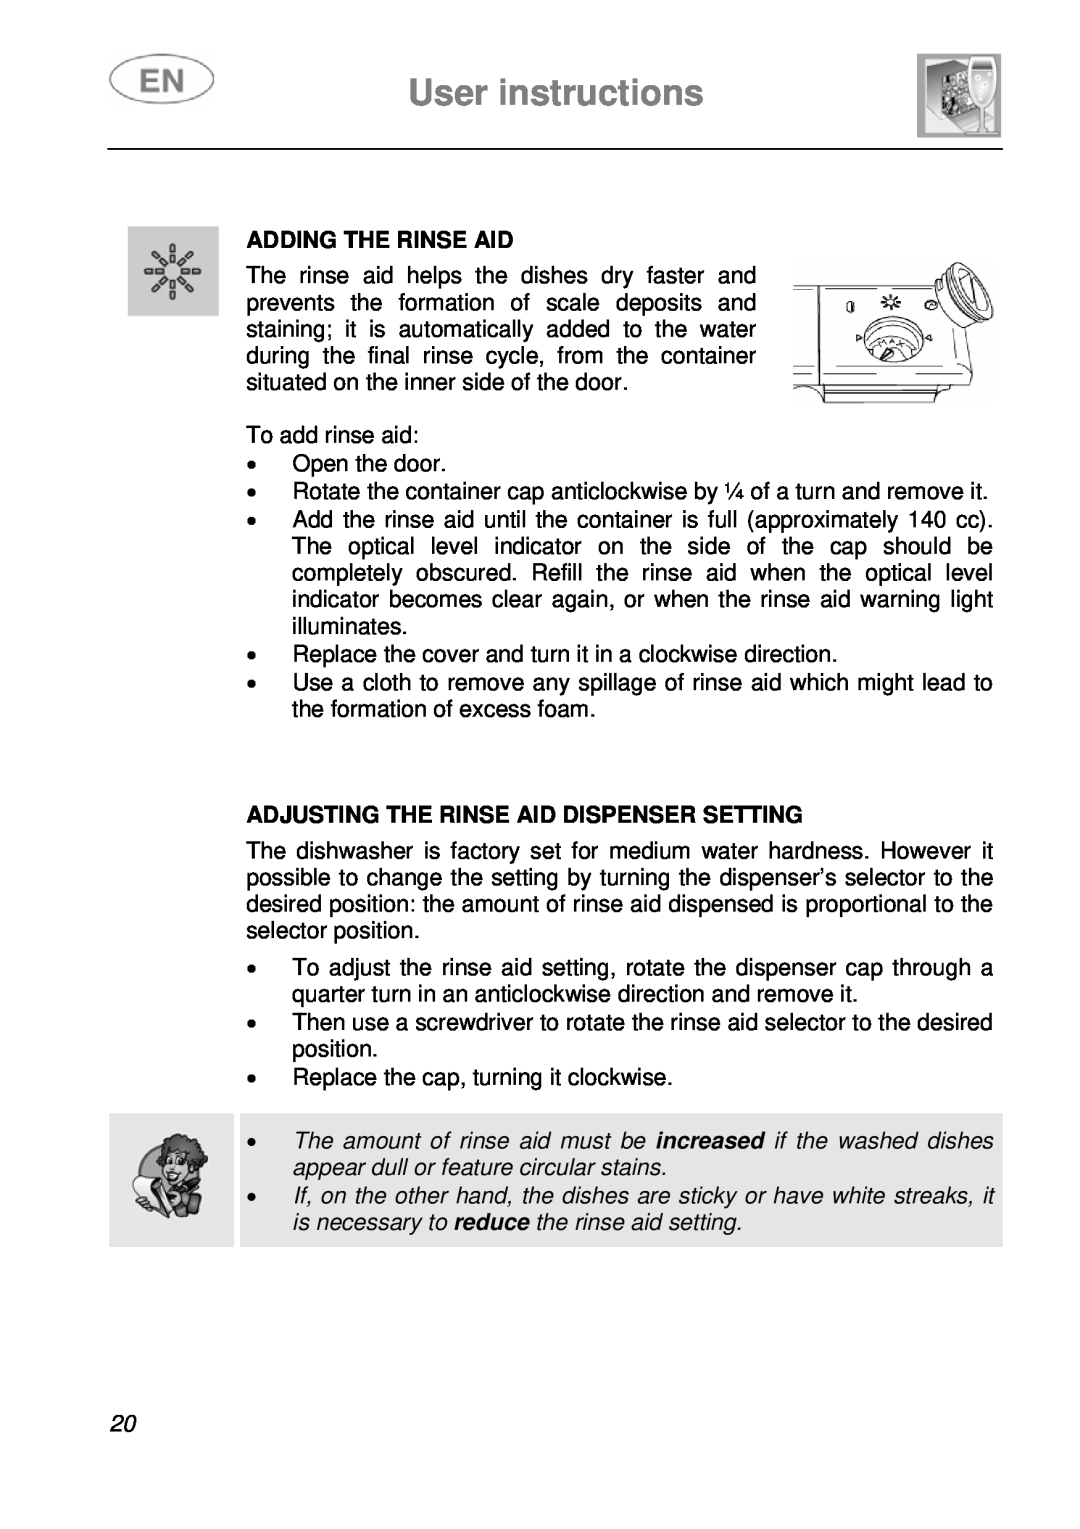 Smeg LSA643XPQ instruction manual User instructions, Adding The Rinse Aid, Adjusting The Rinse Aid Dispenser Setting 